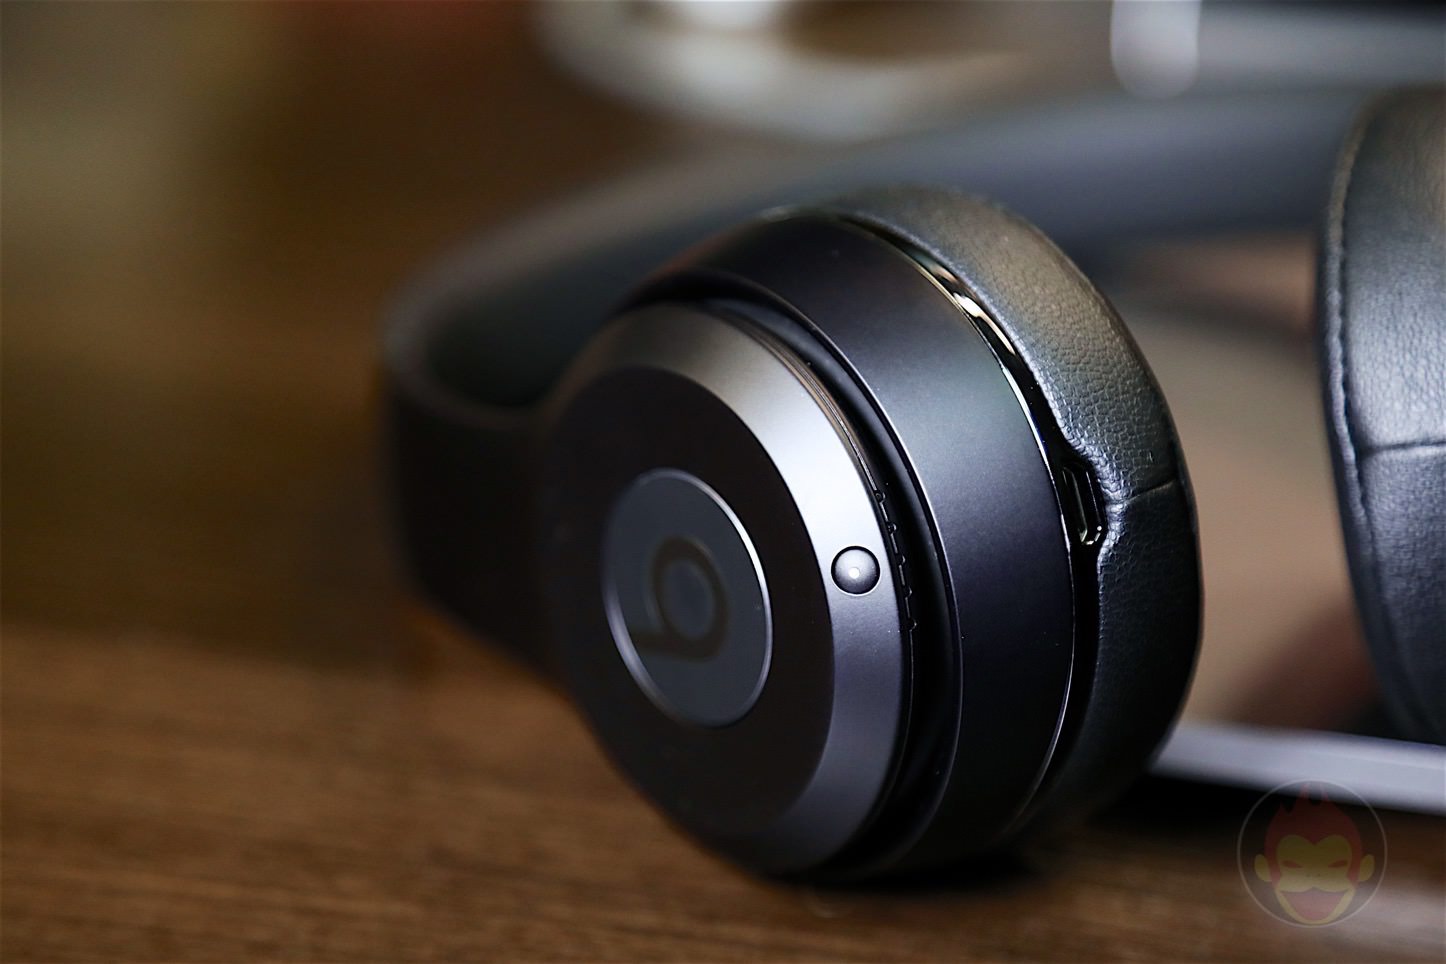 Beats-Solo3-Wireless-Headphones-17.jpg